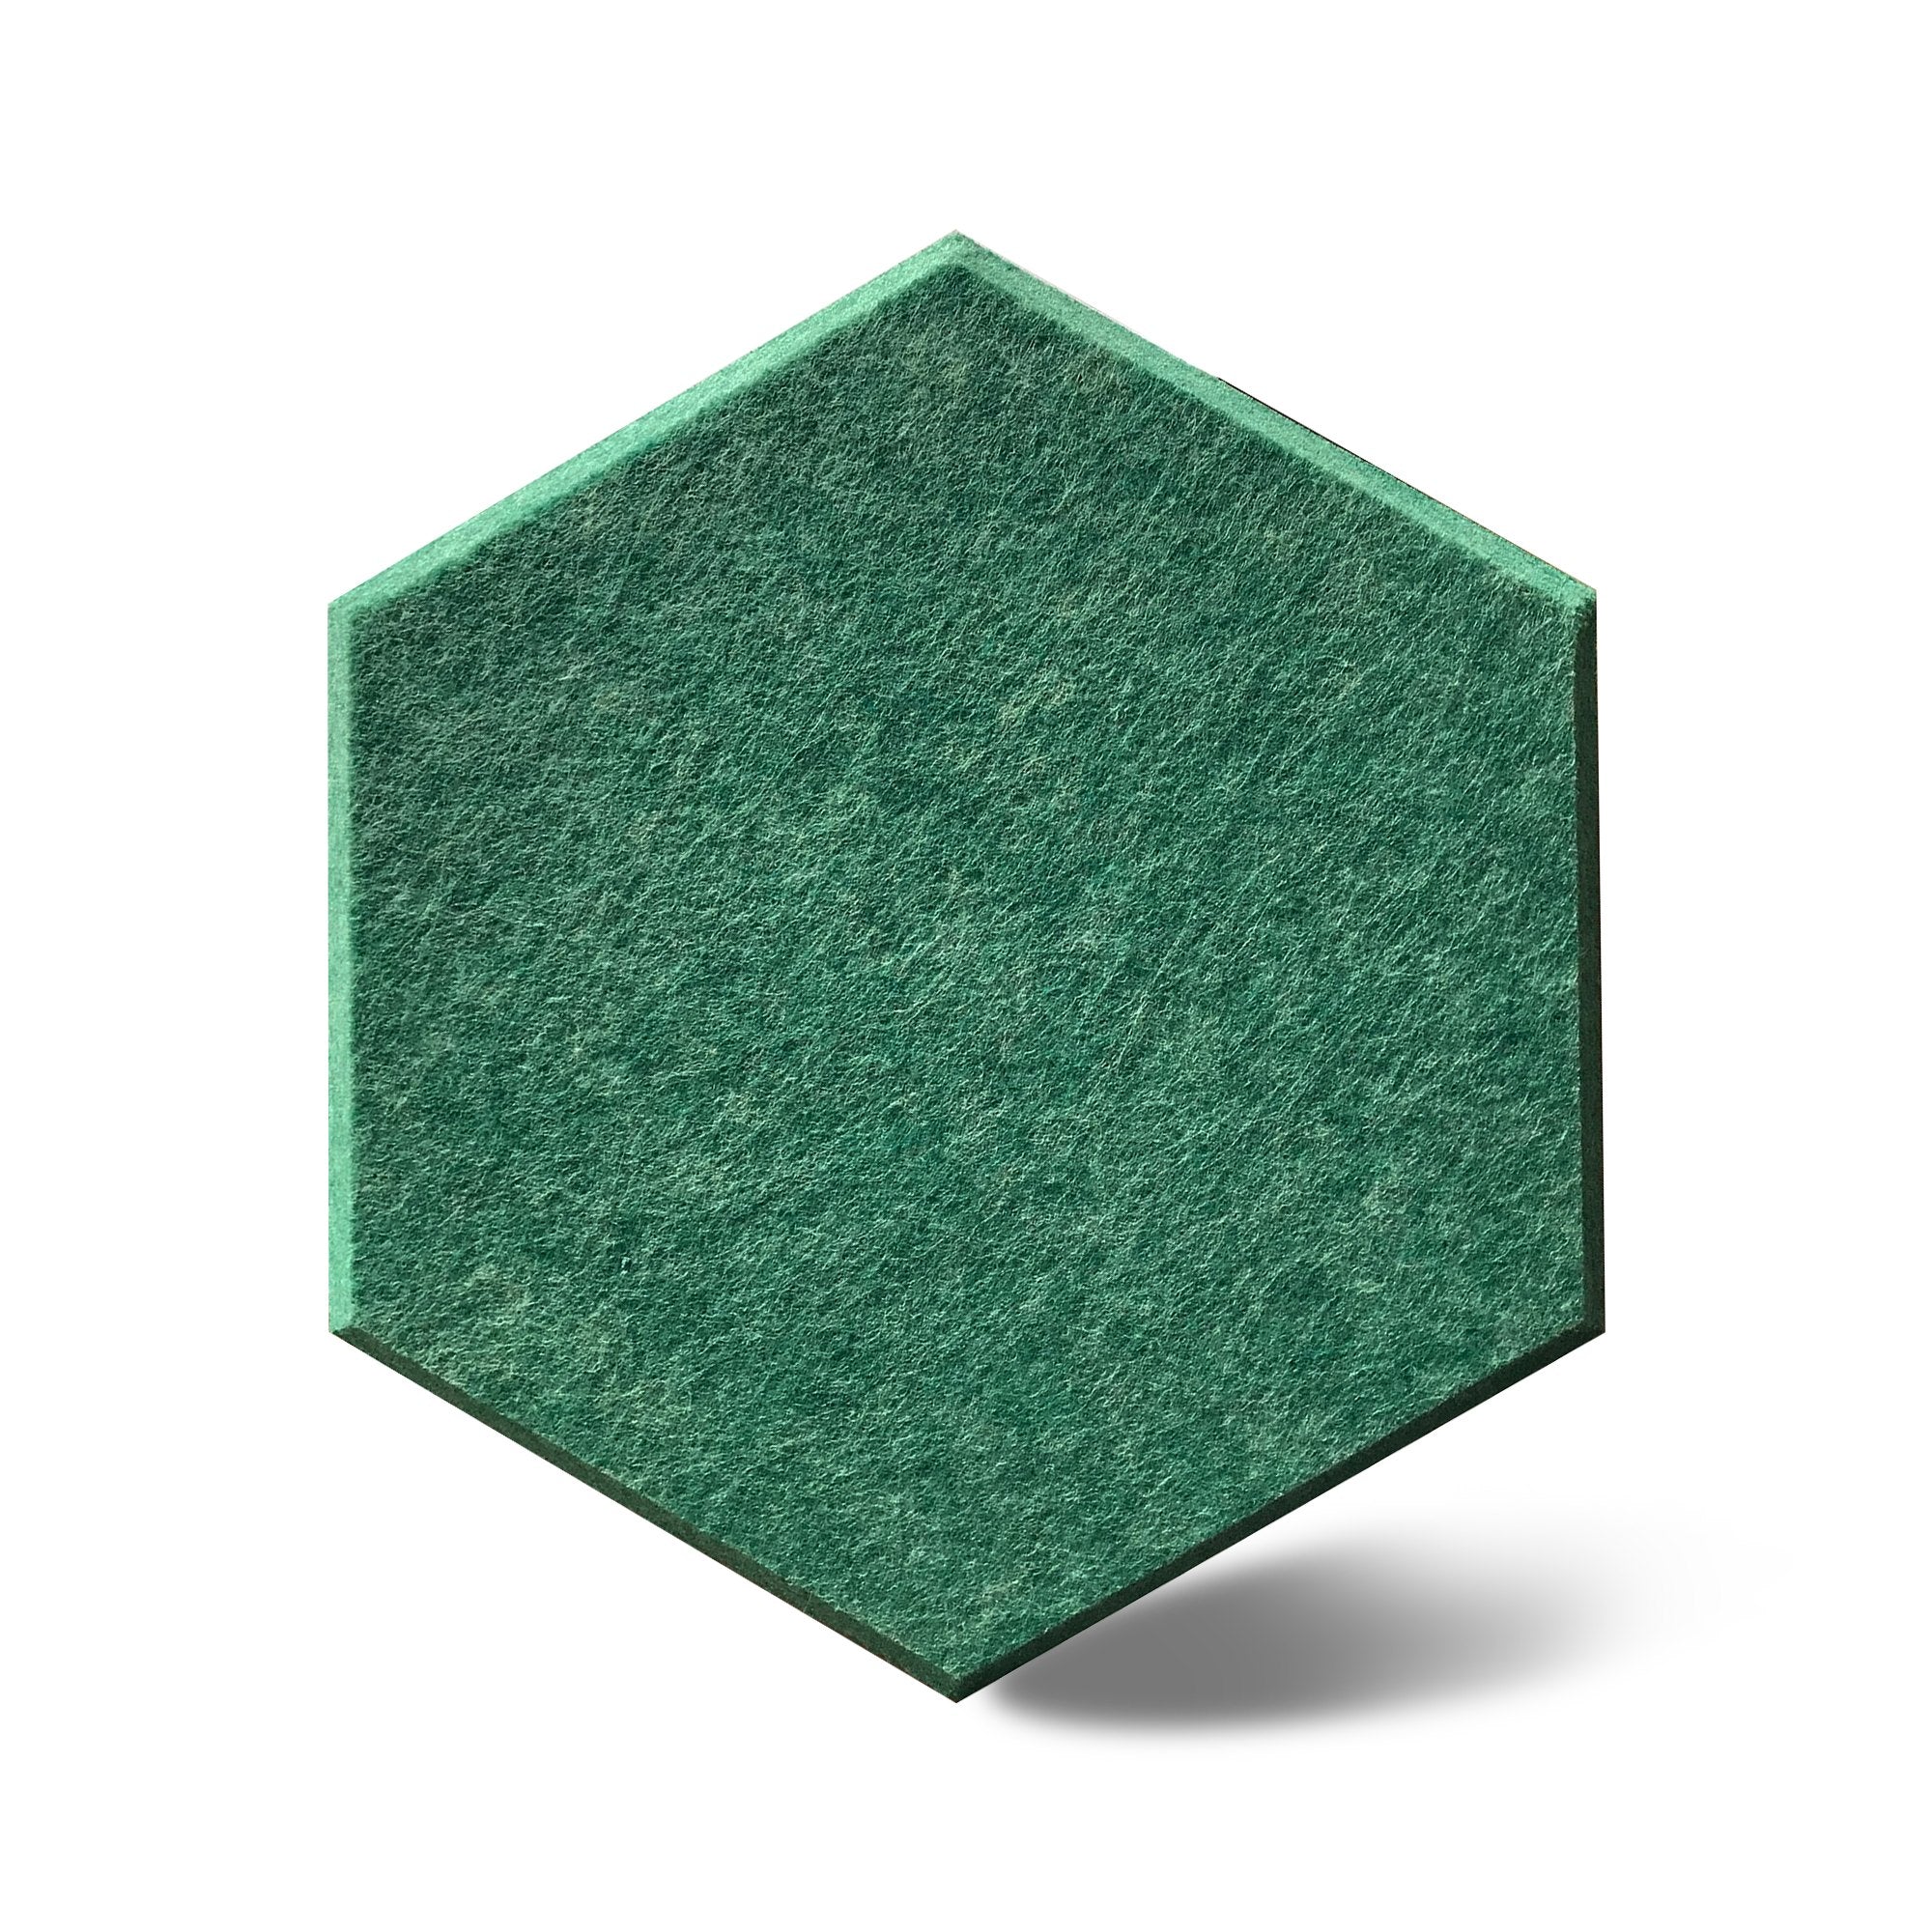 HEXA Felt 3D - DARK GREEN 3pcs. - Felt 3D Panels | DecorMania